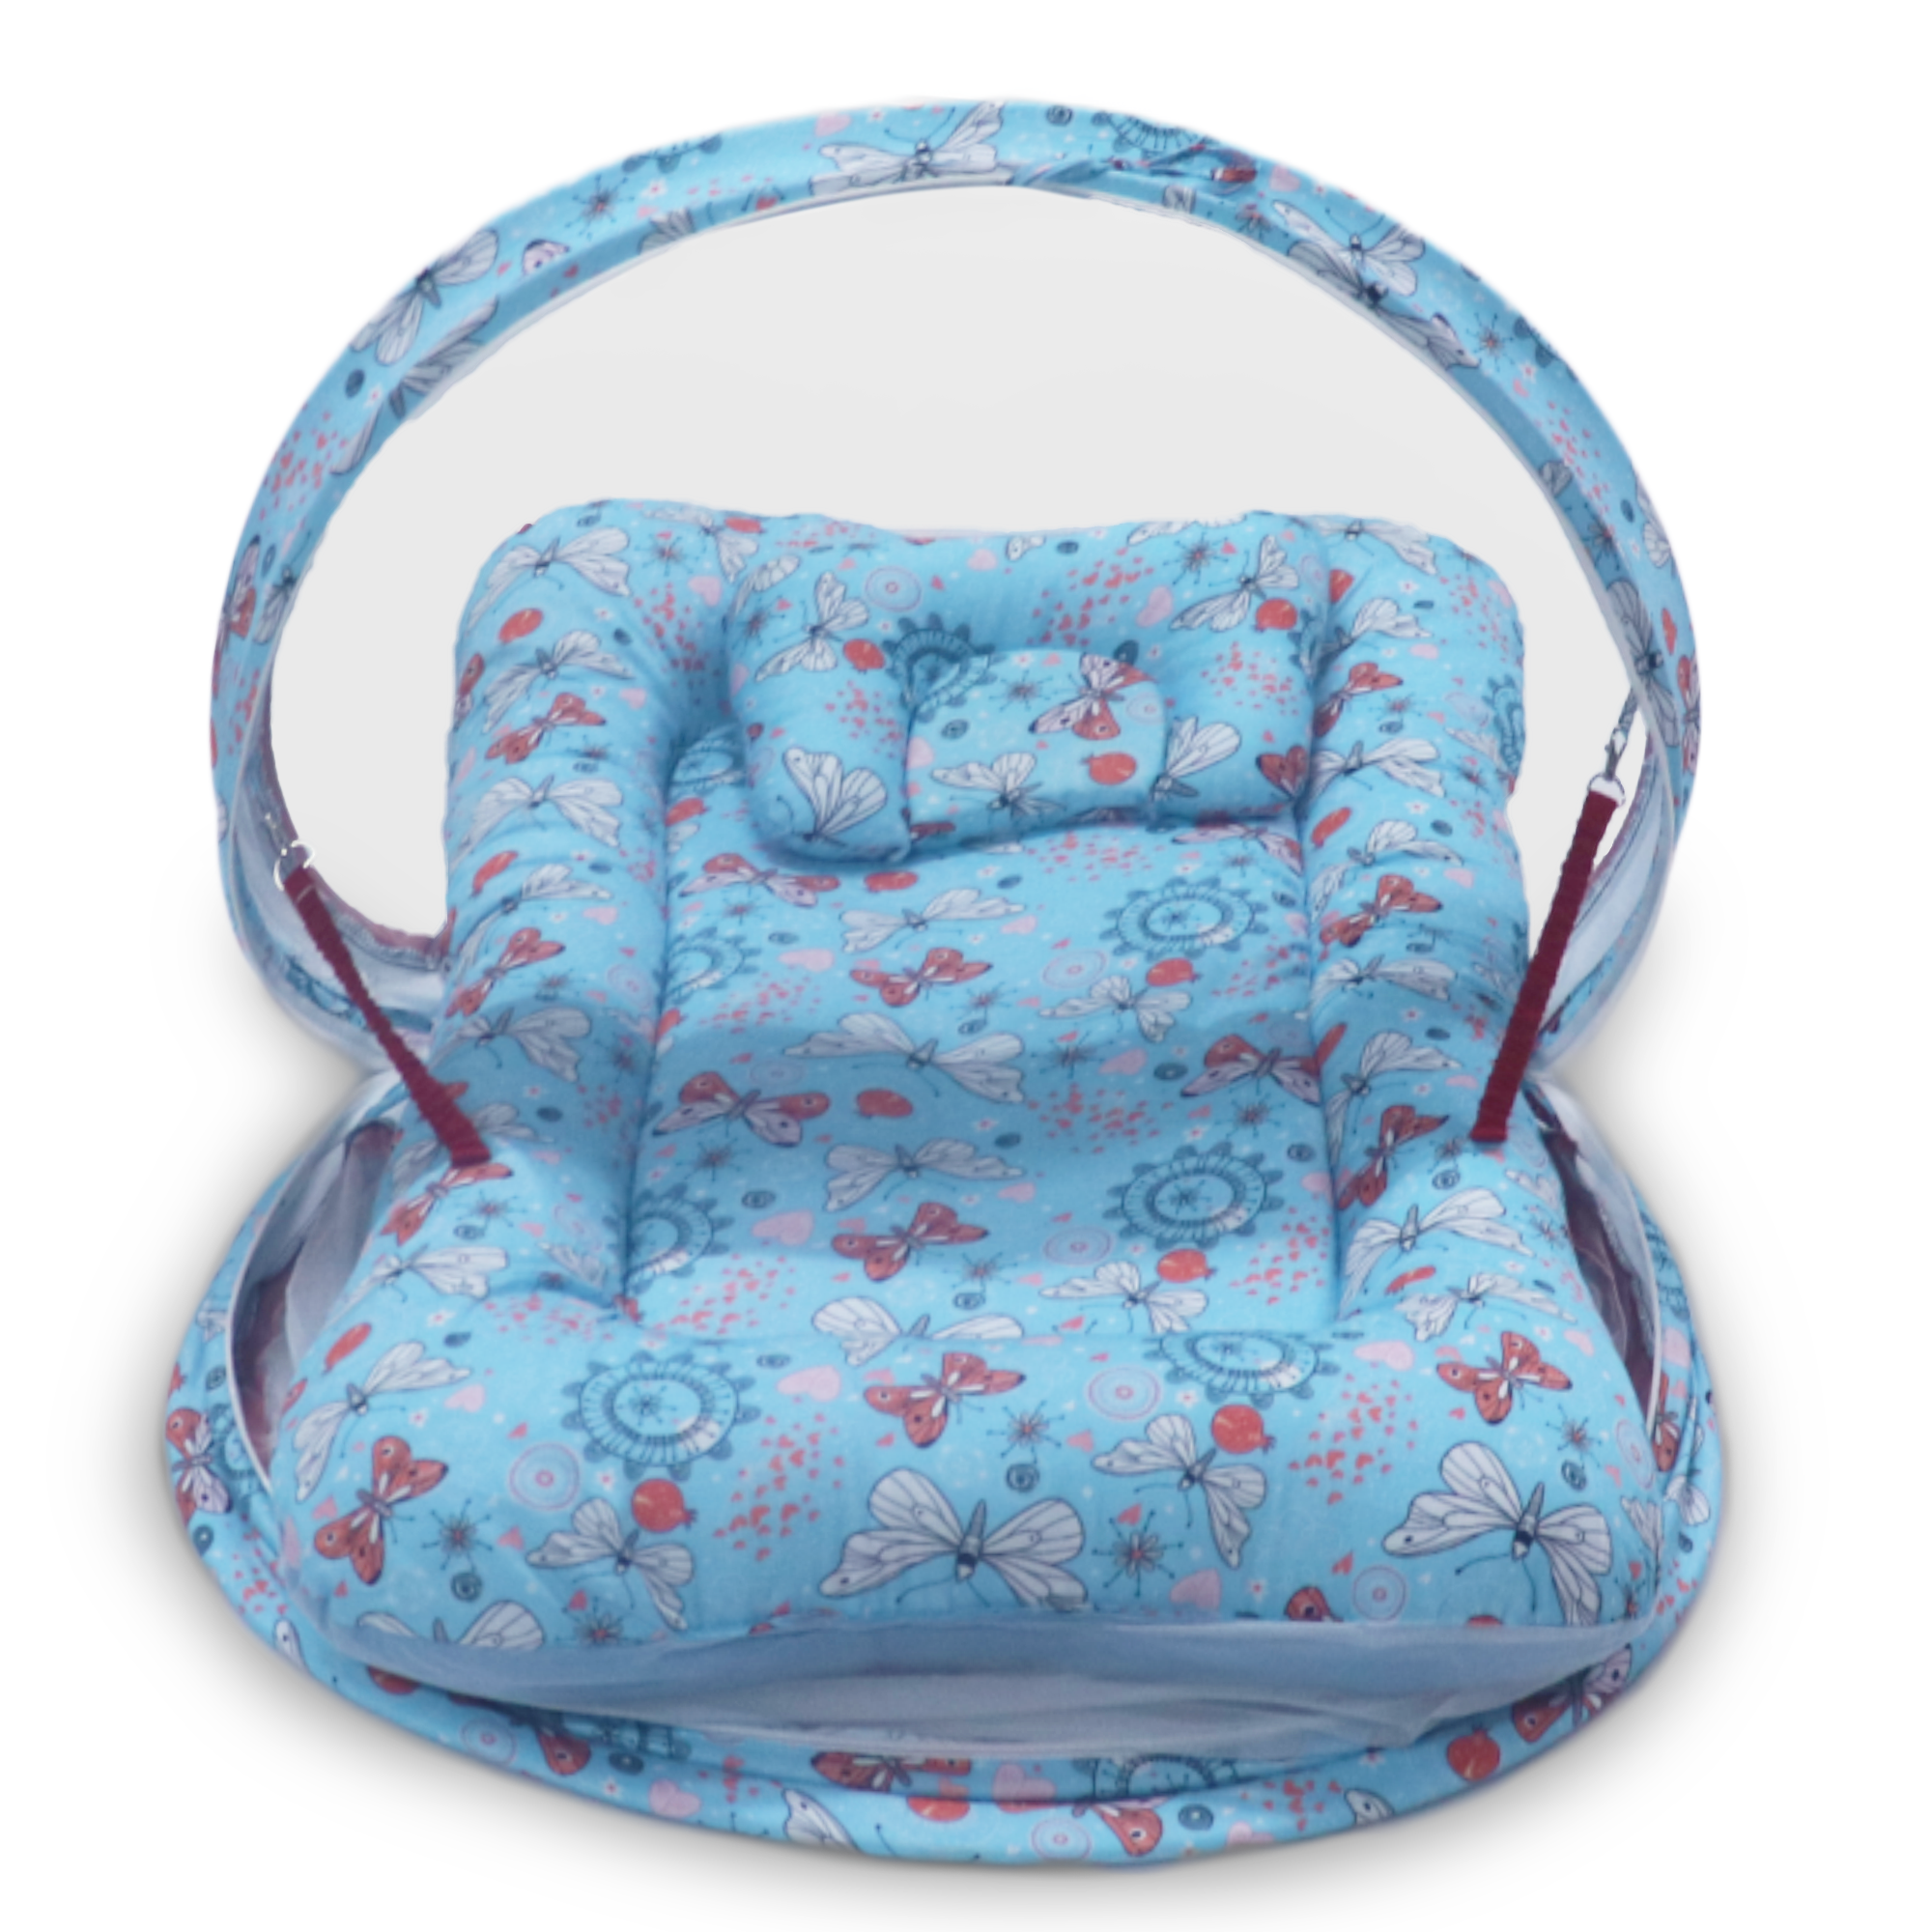 Blue Butterfly -  Kradyl Kroft Bassinet Style Mosquito Net Bedding for Infants